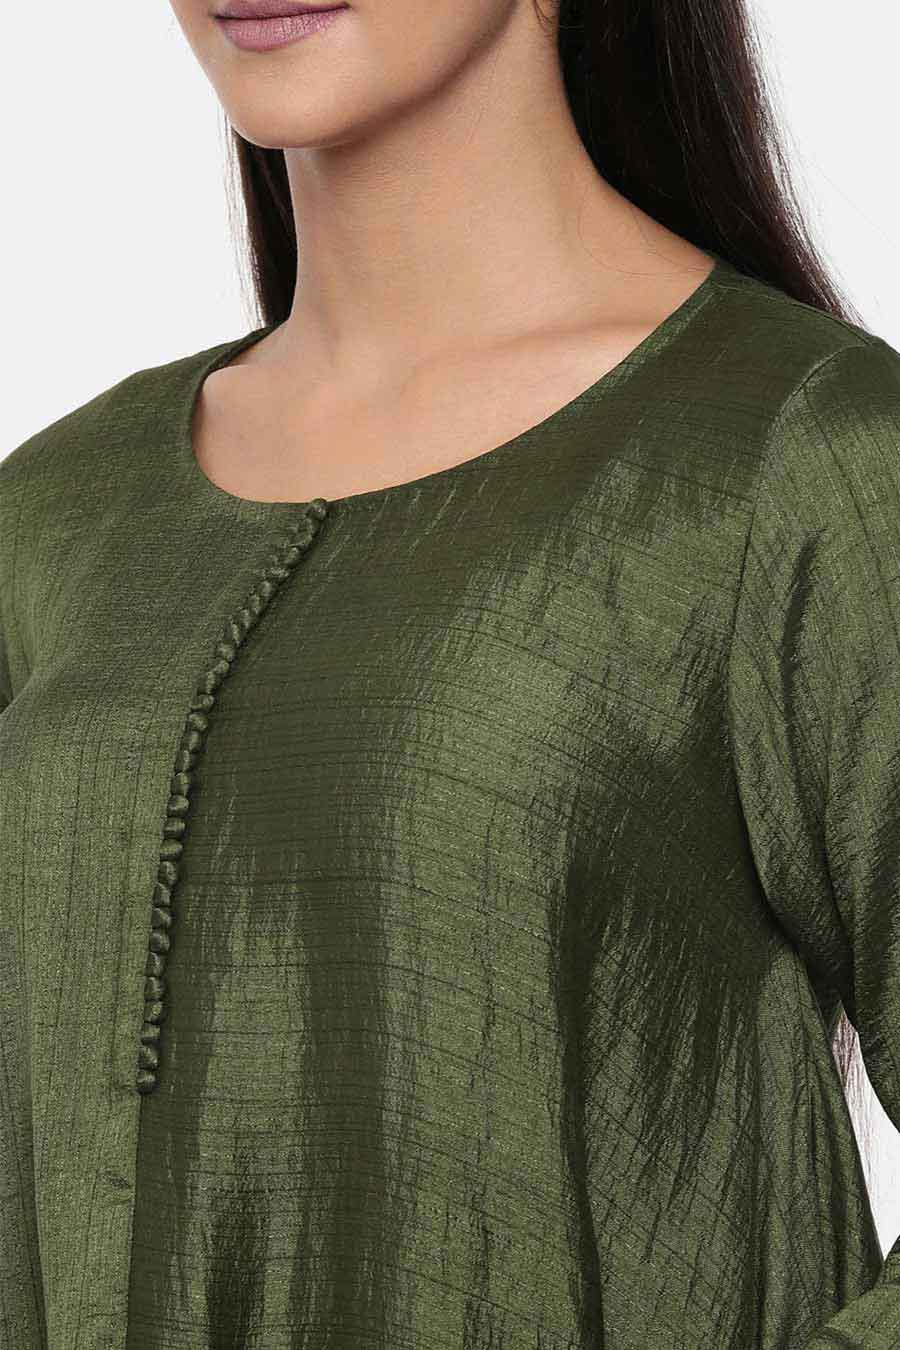 Green Cotton Silk Potli Dress